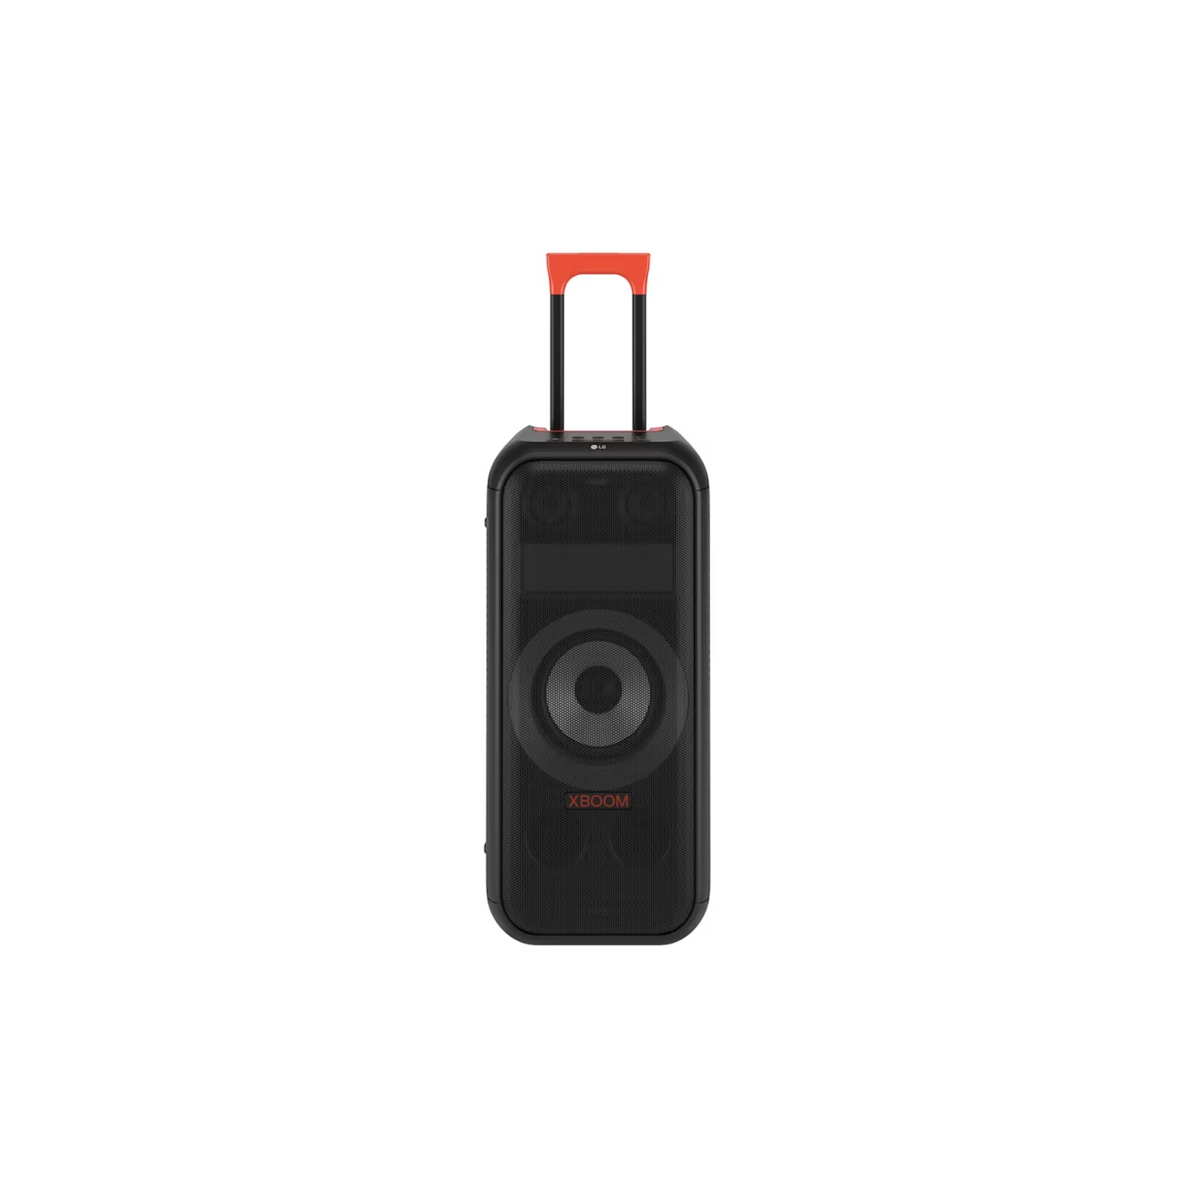 LG XBOOM One Box Hifi Bluetooth Party Speaker, 250 W, Black, XL7S